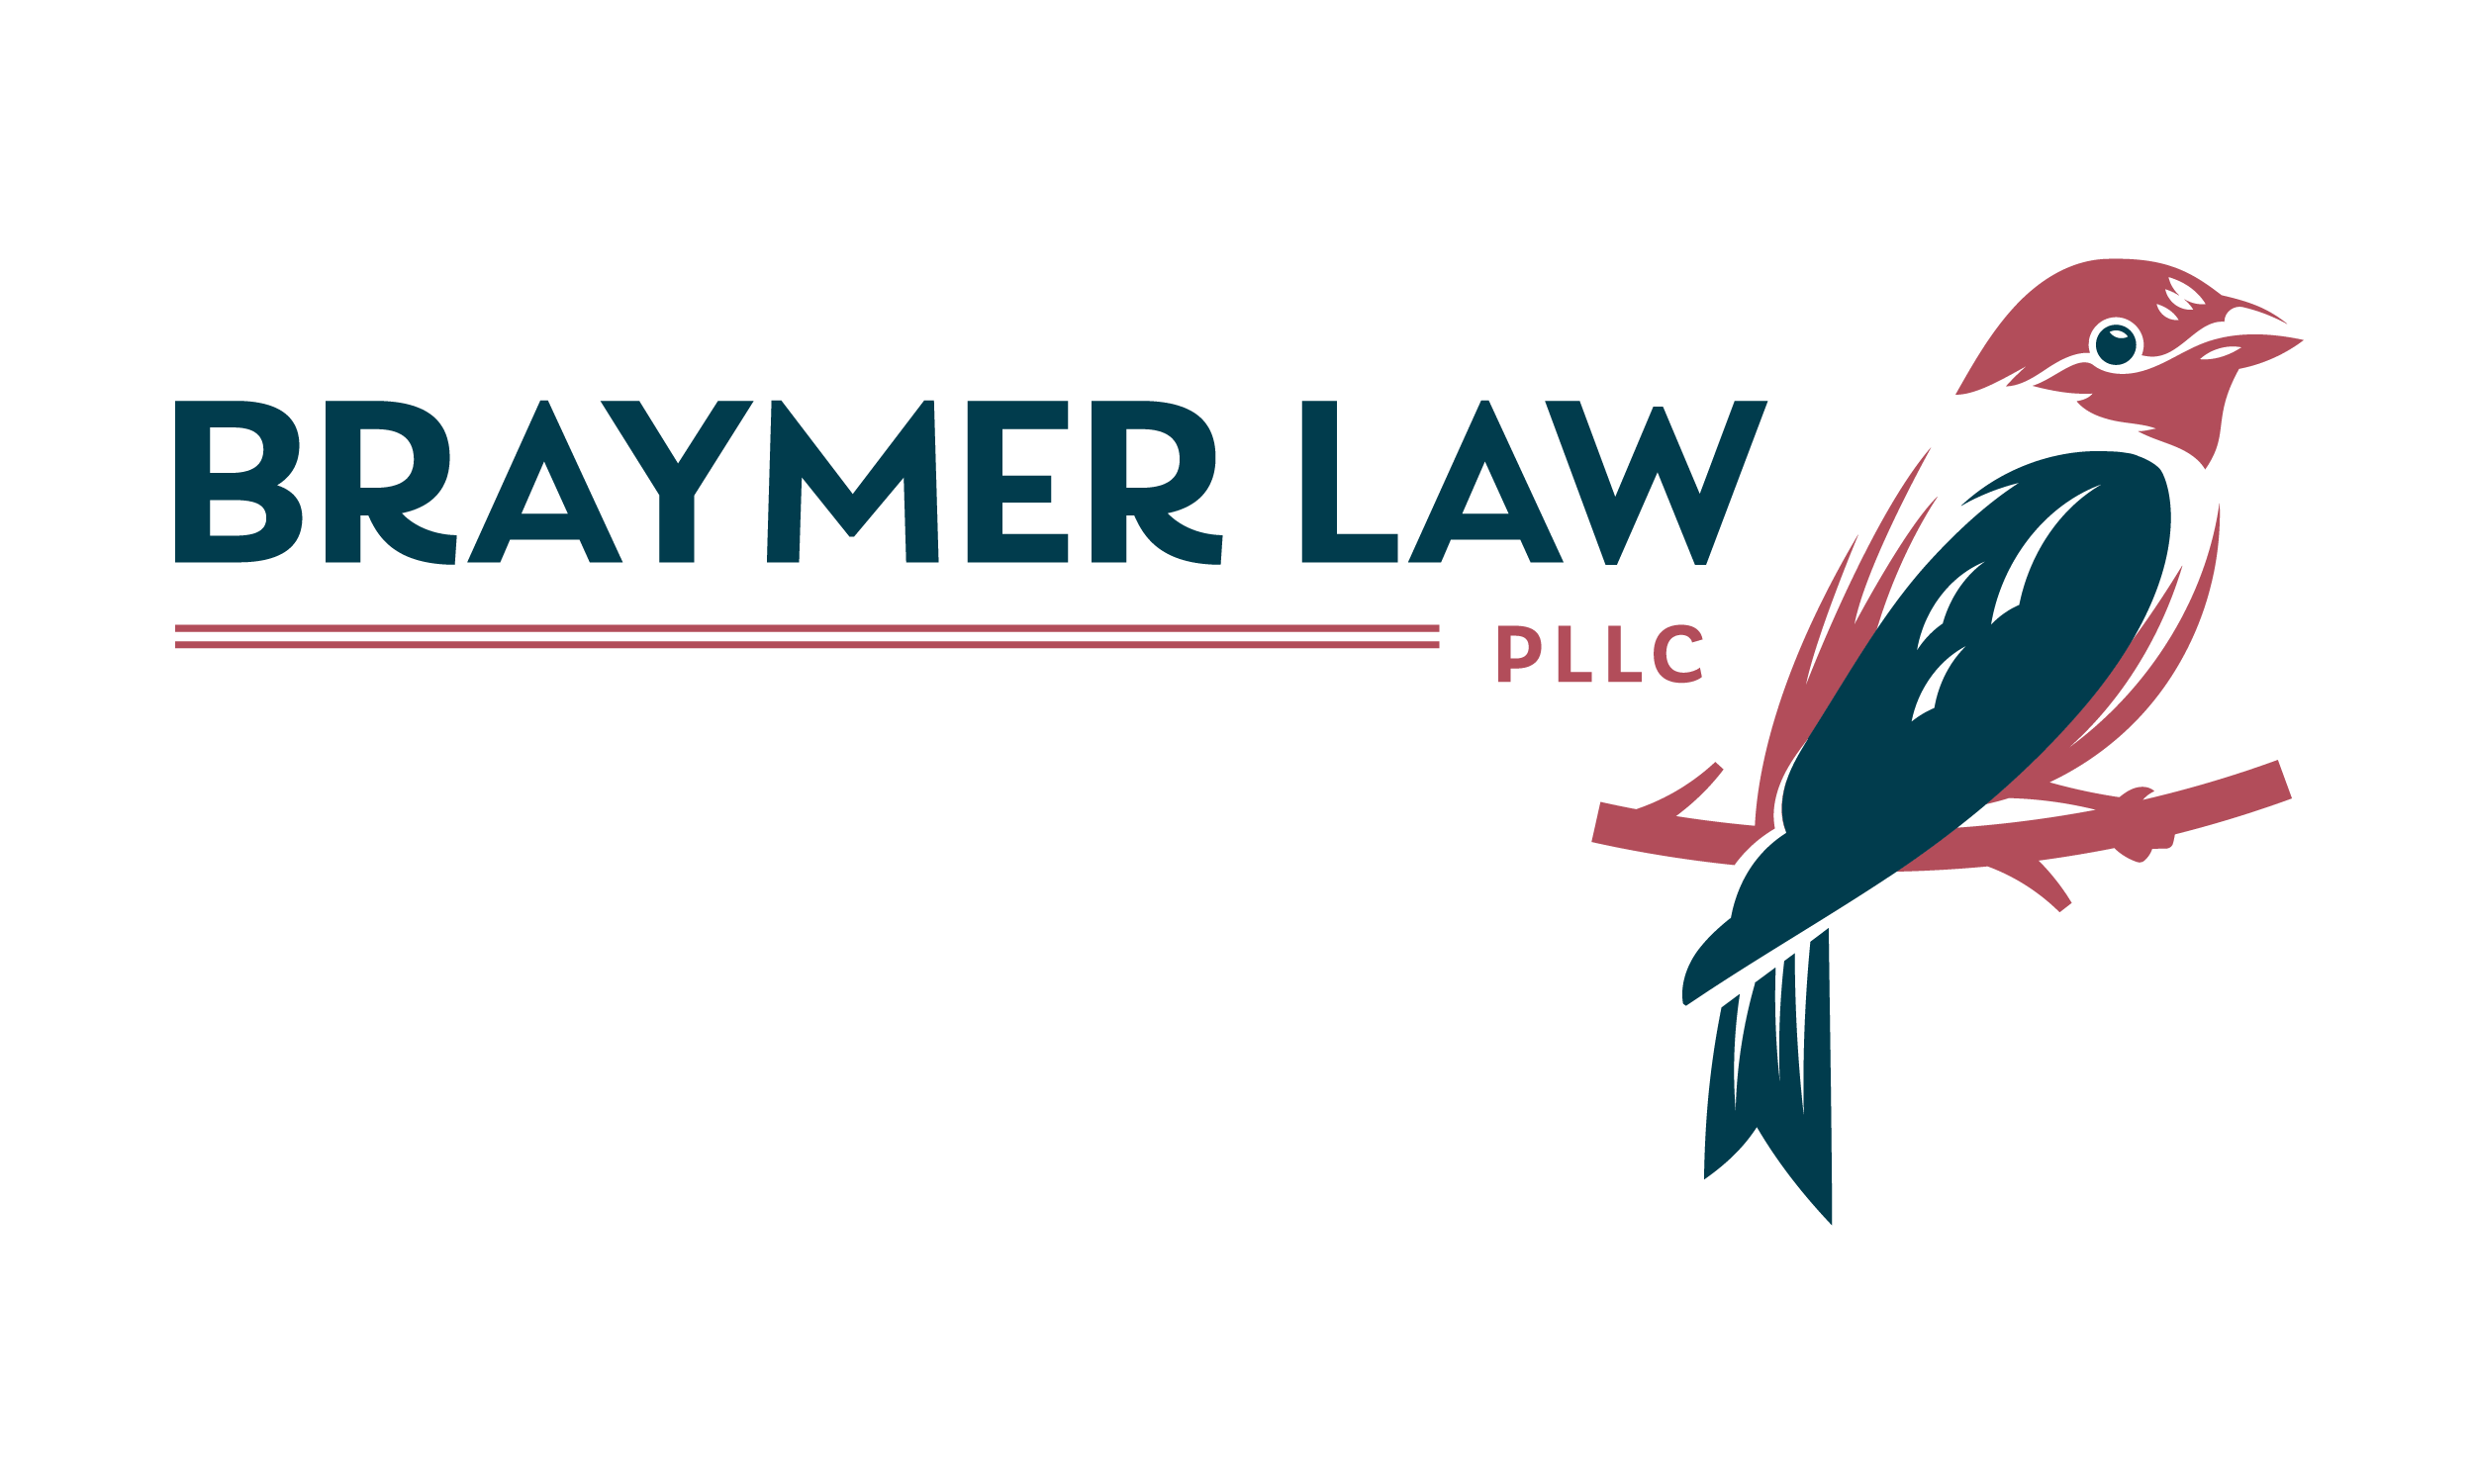 Braymer Law PLLC